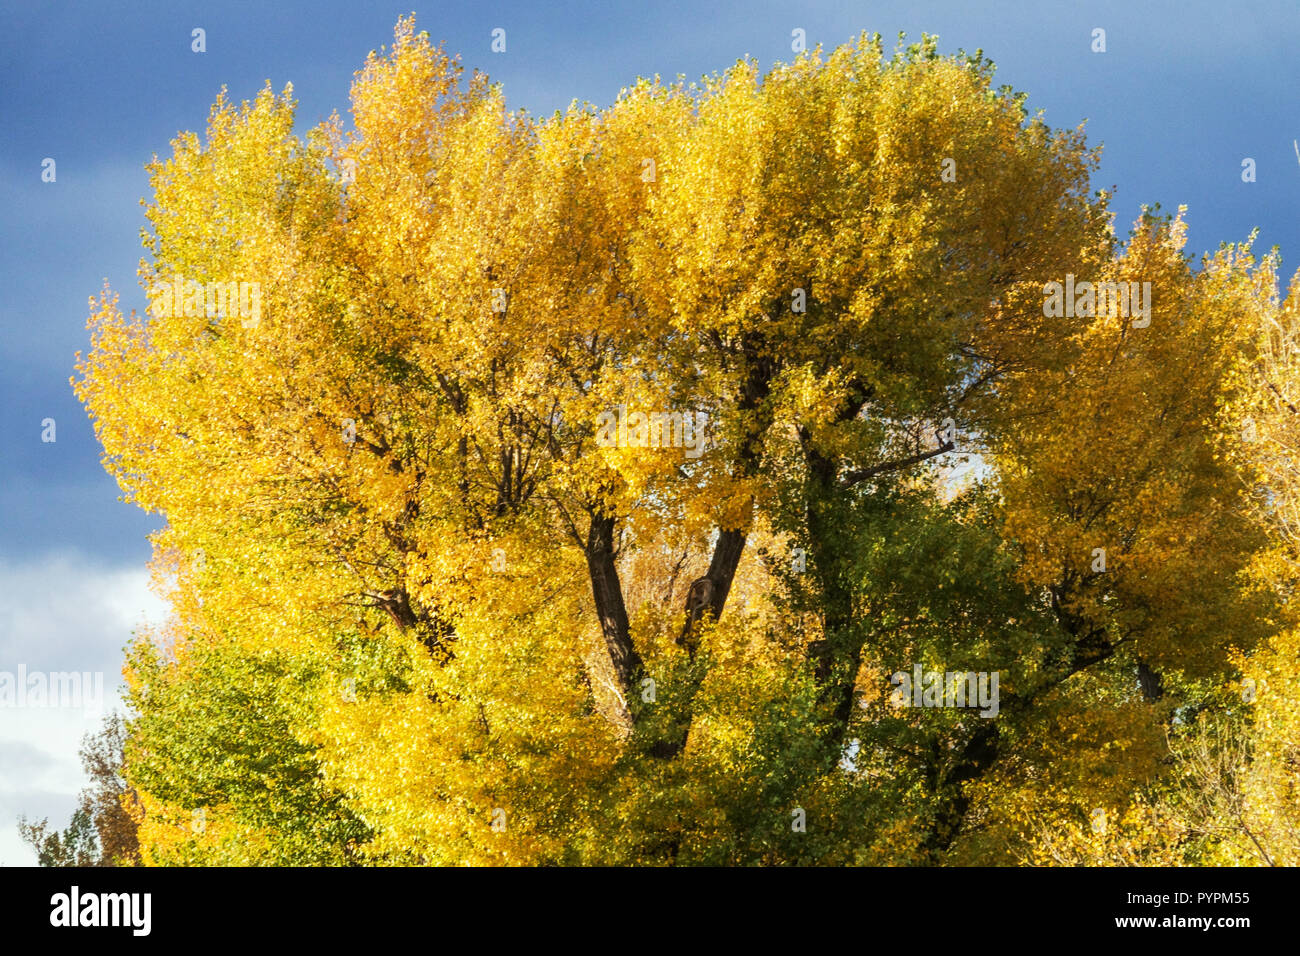 Populus nigra tree, autumn yellow leaves, foliage, old tree on the bank of the Danube river, Austria, Black Poplar Tree deciduous trees Stock Photo